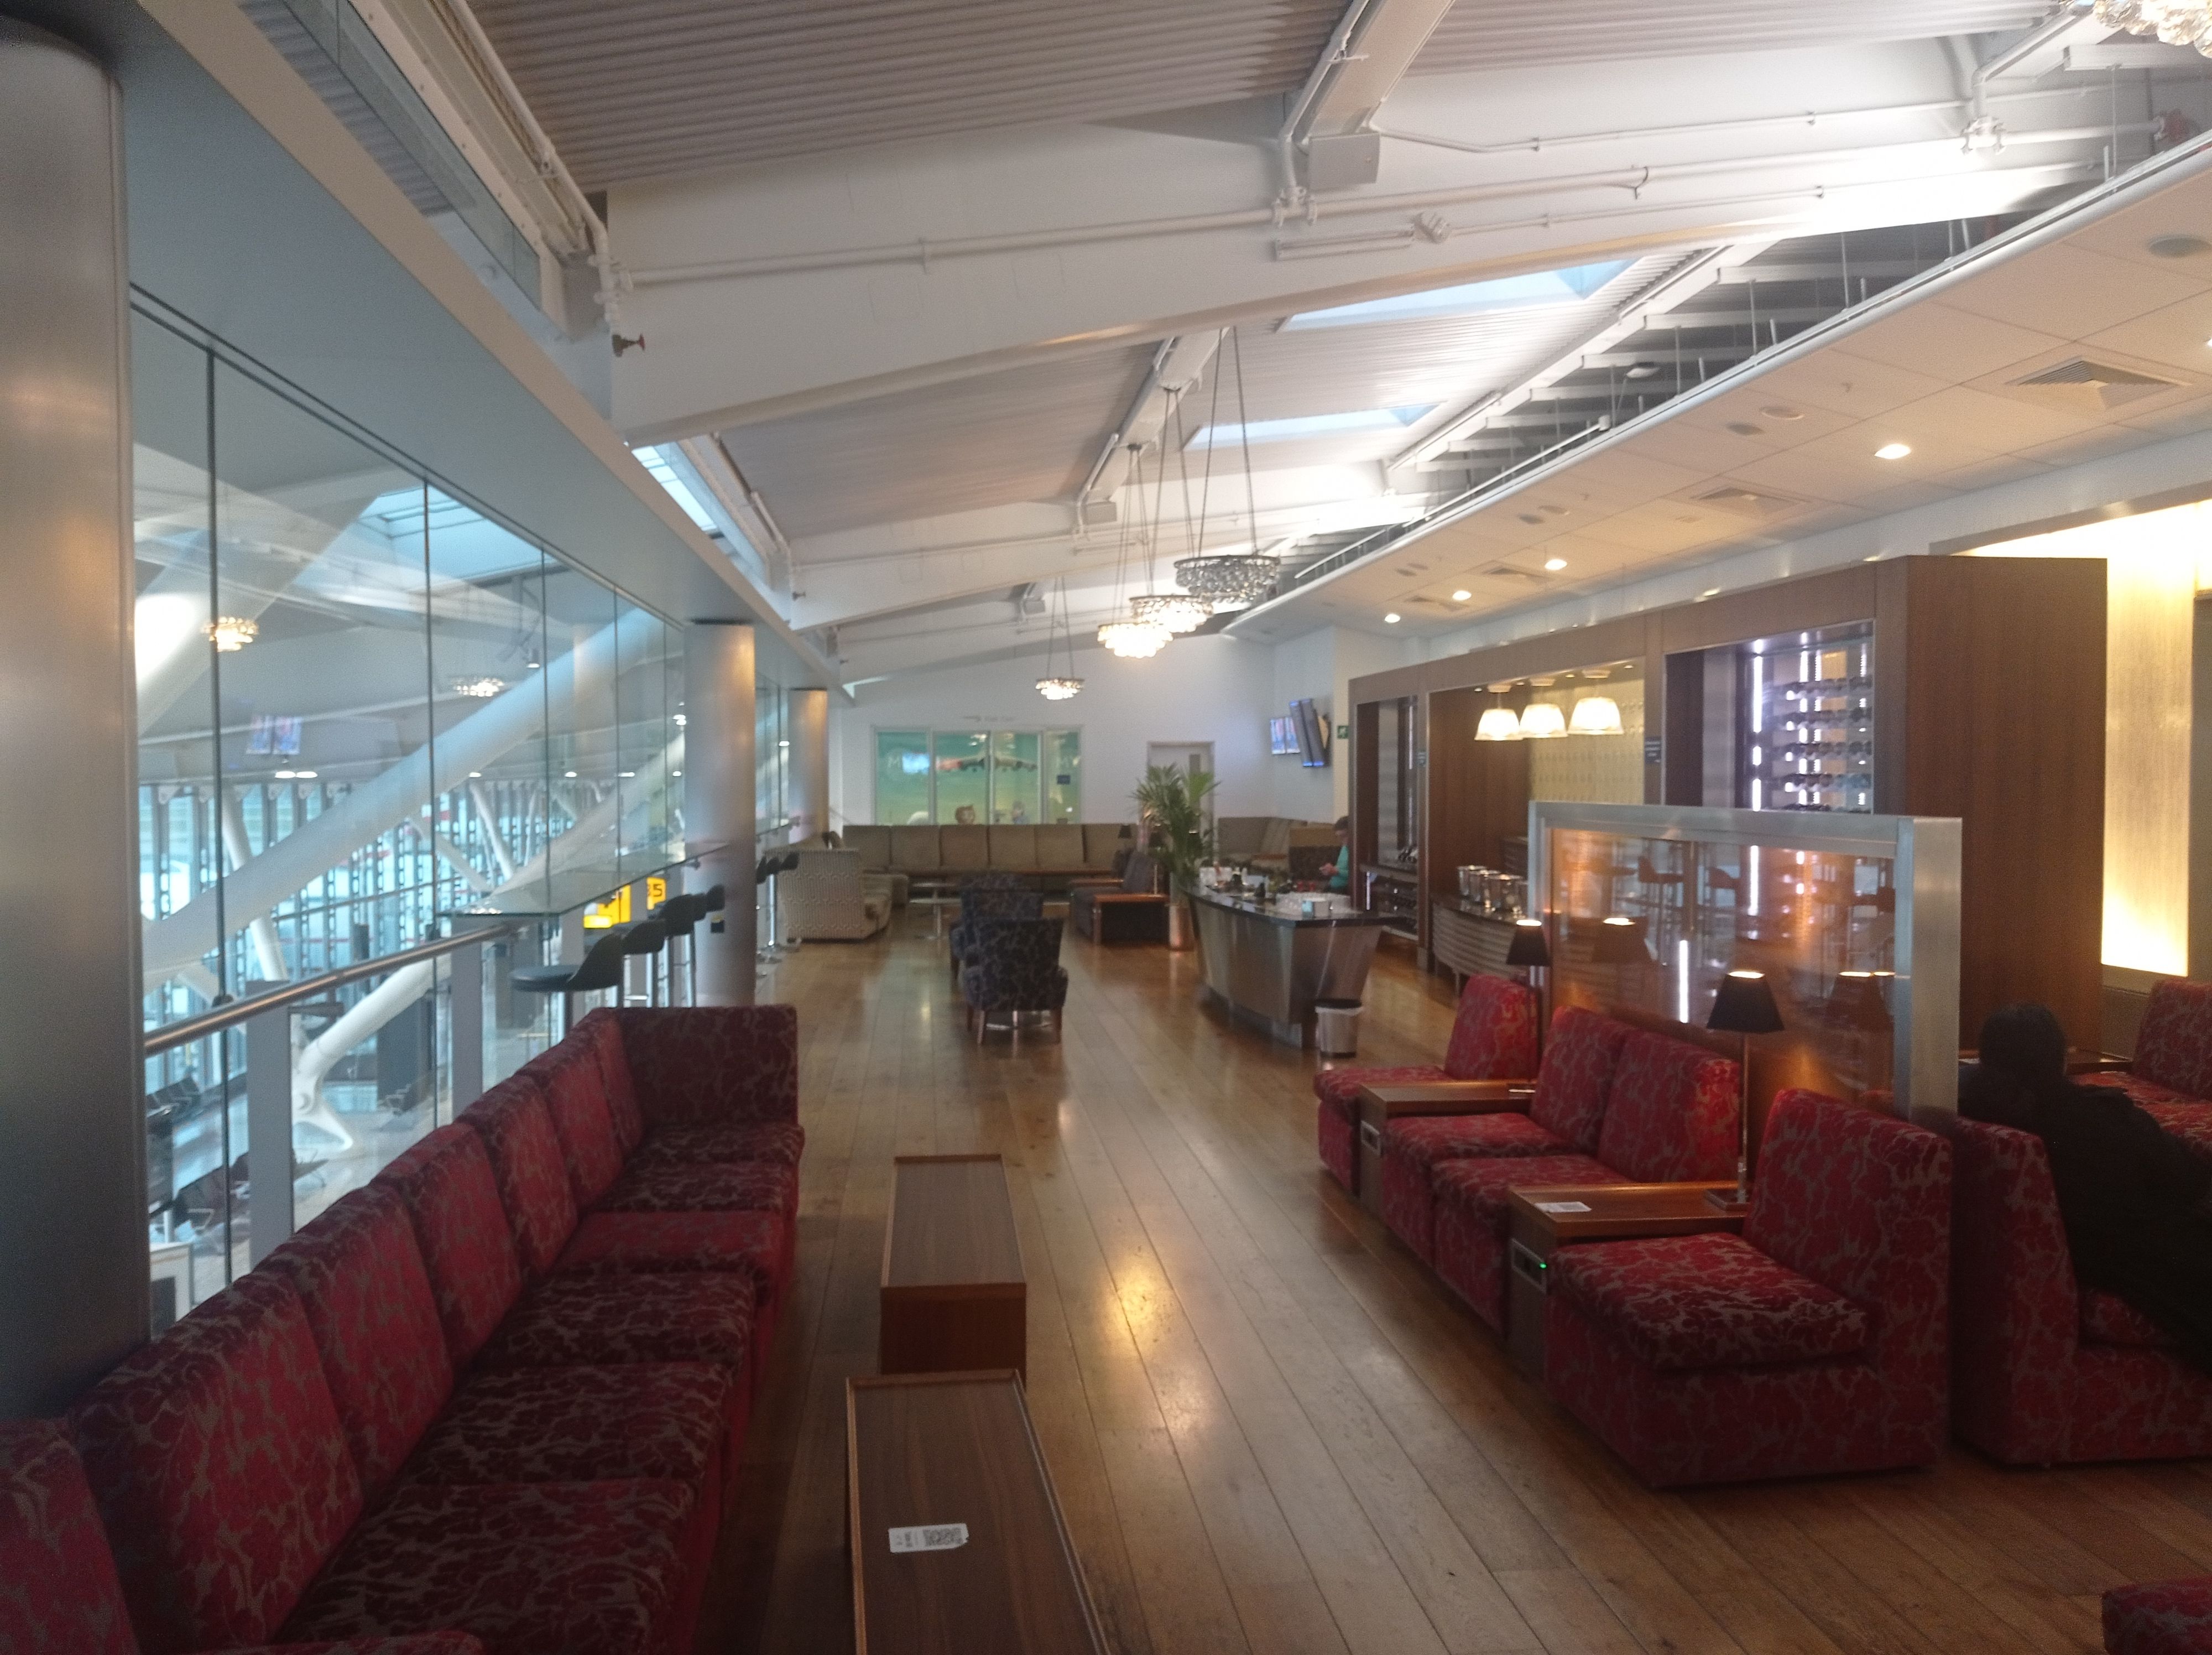 Interior of the British Airways lounge